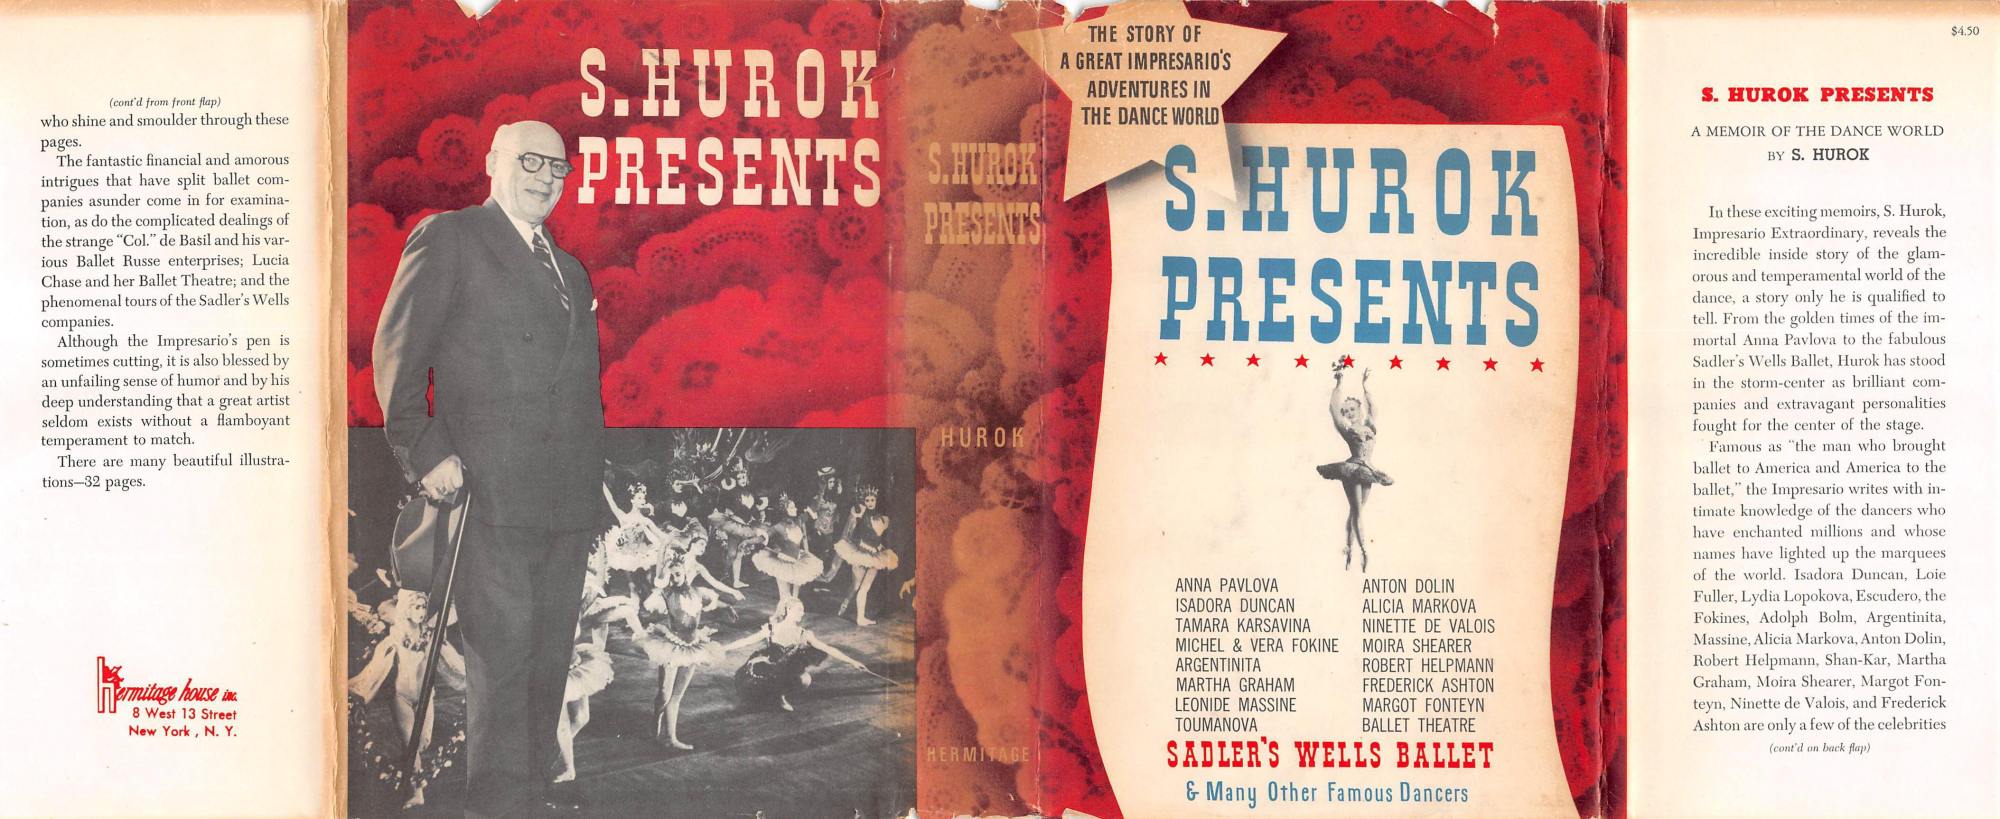 The Project Gutenberg eBook of a memoir of the Dance World, by Sol Hurok.